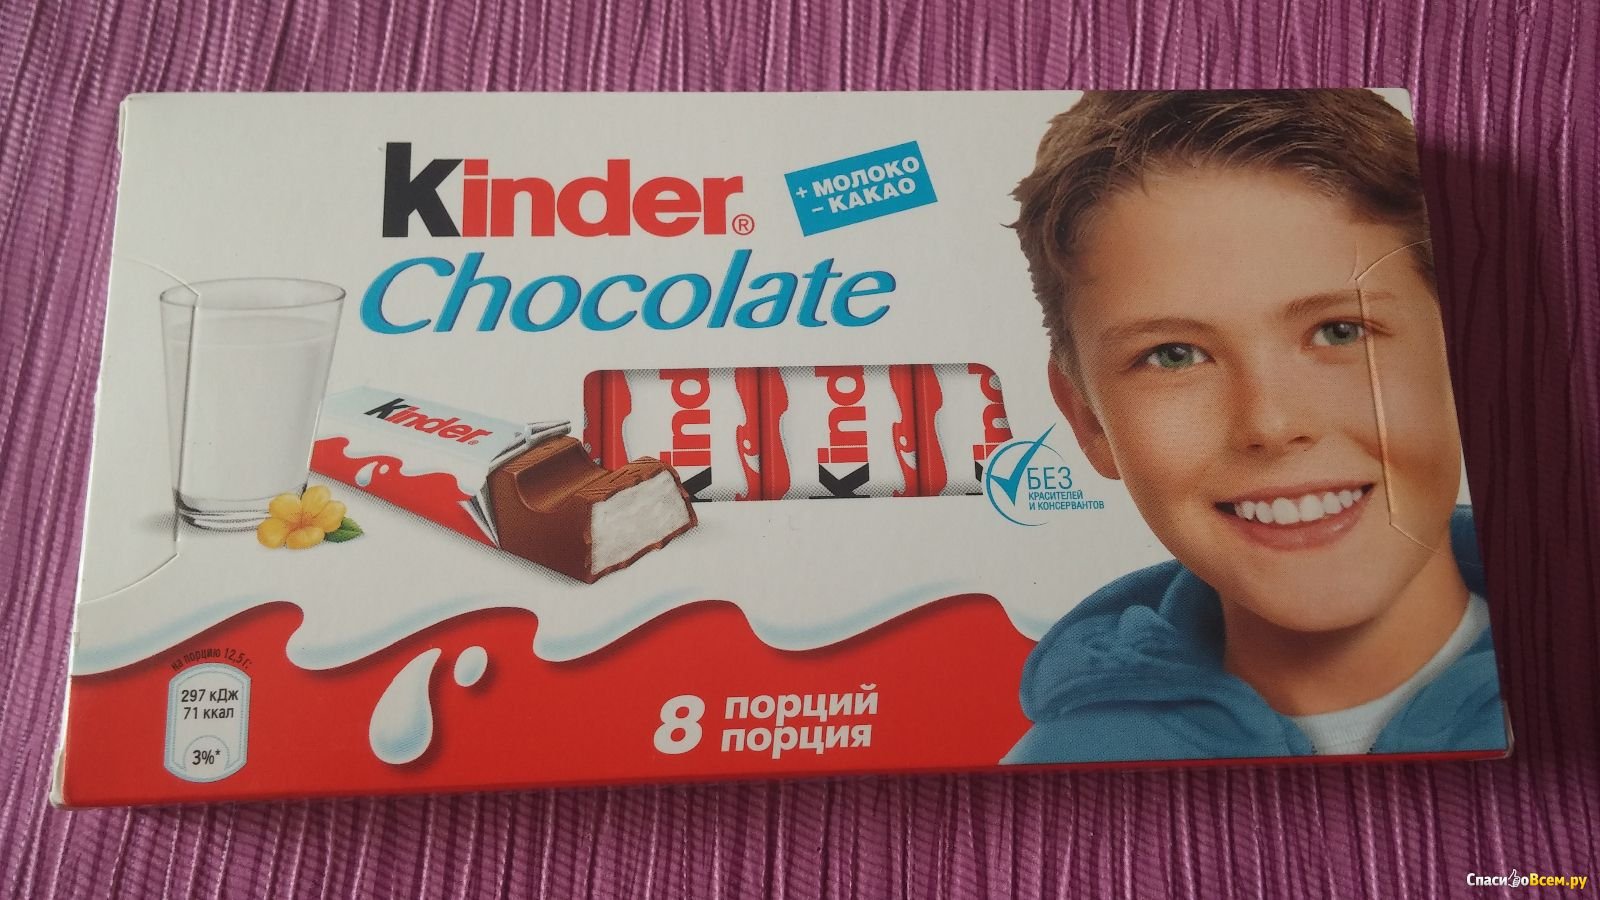 Ihr kinder. Киндер шоколад. Детский шоколад Киндер. Шоколад Киндер шоколад. Шоколад kinder Chocolate.